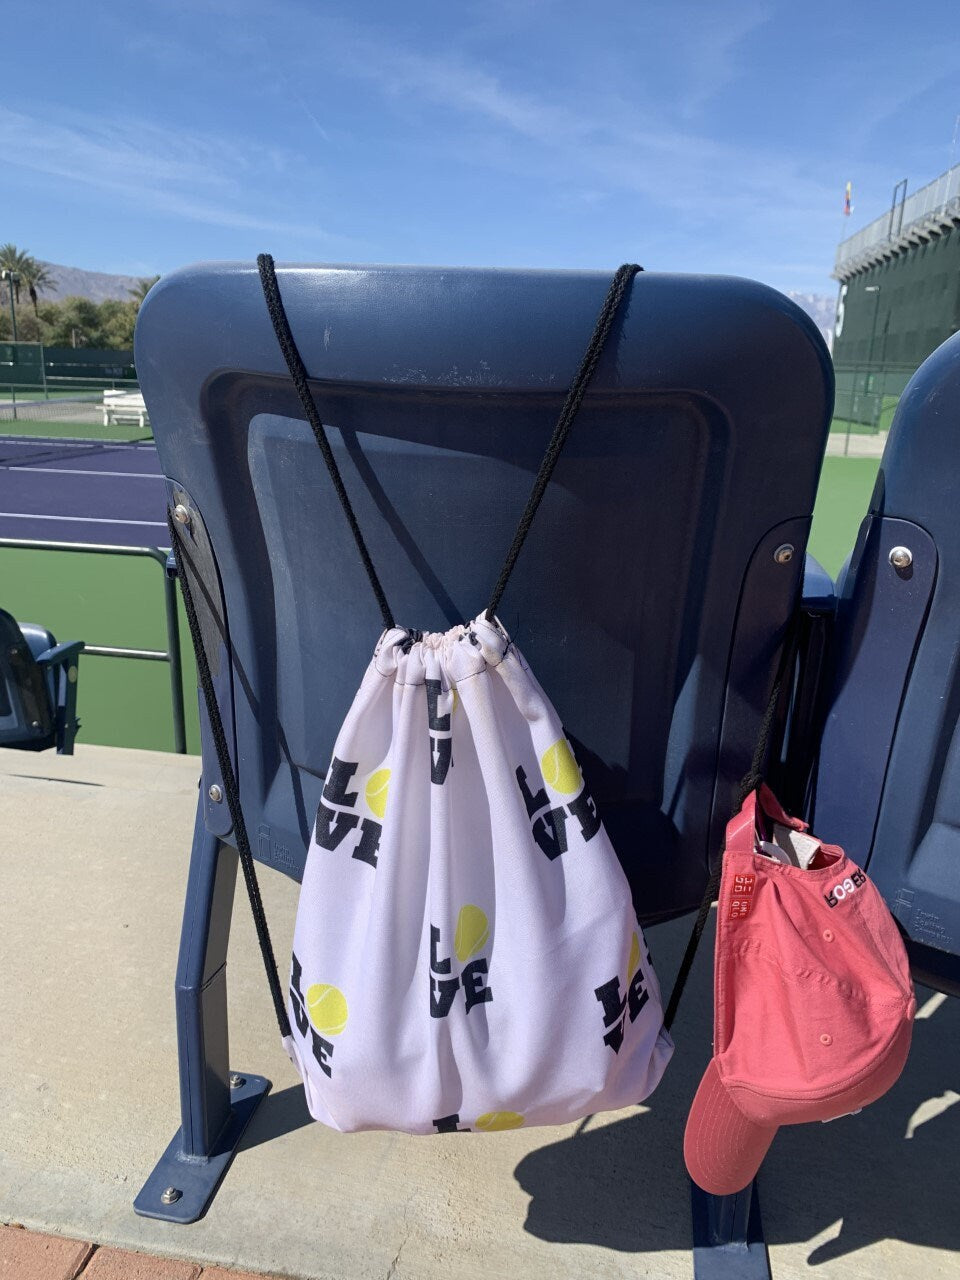 Tennis Bags, Tennis Gifts, Love Tennis, Tennis Drawstring Bag, Tennis Backpack, Sports Bags, Tennis Cinch Pack